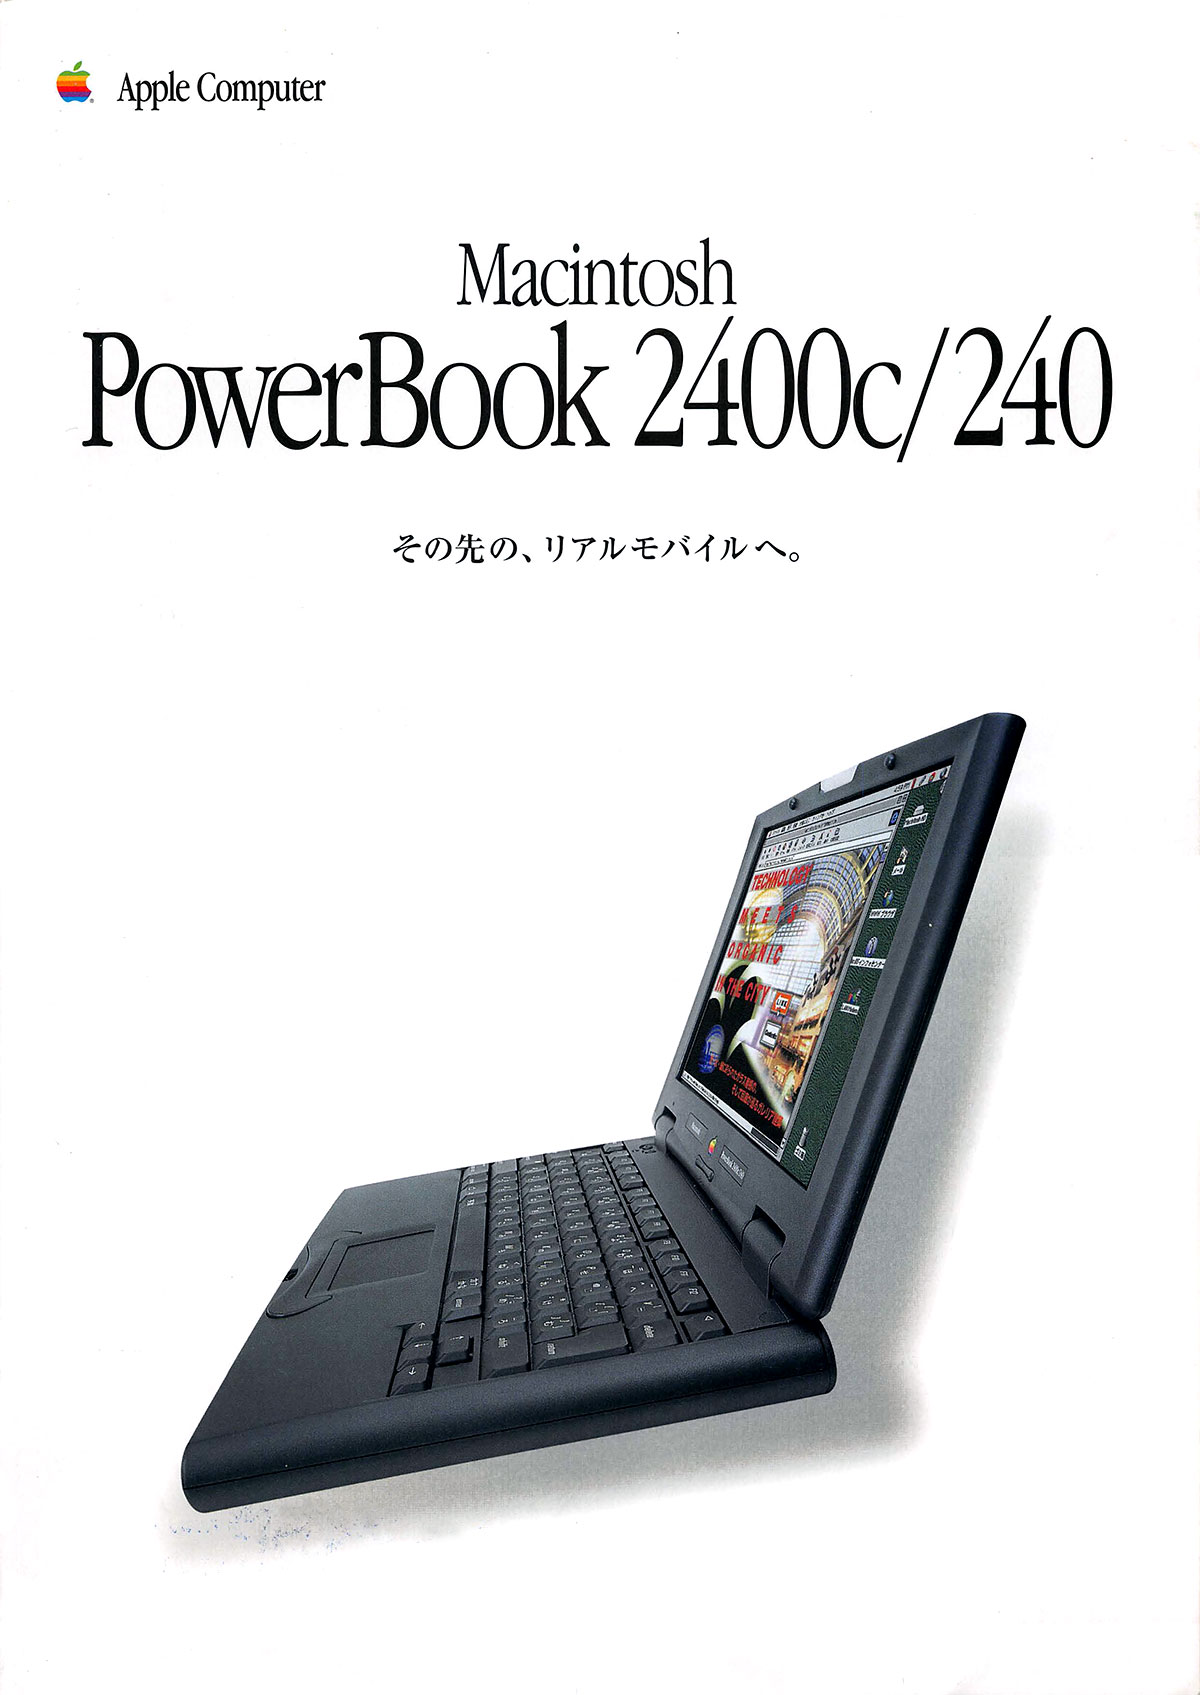 PowerBook 2400c/240